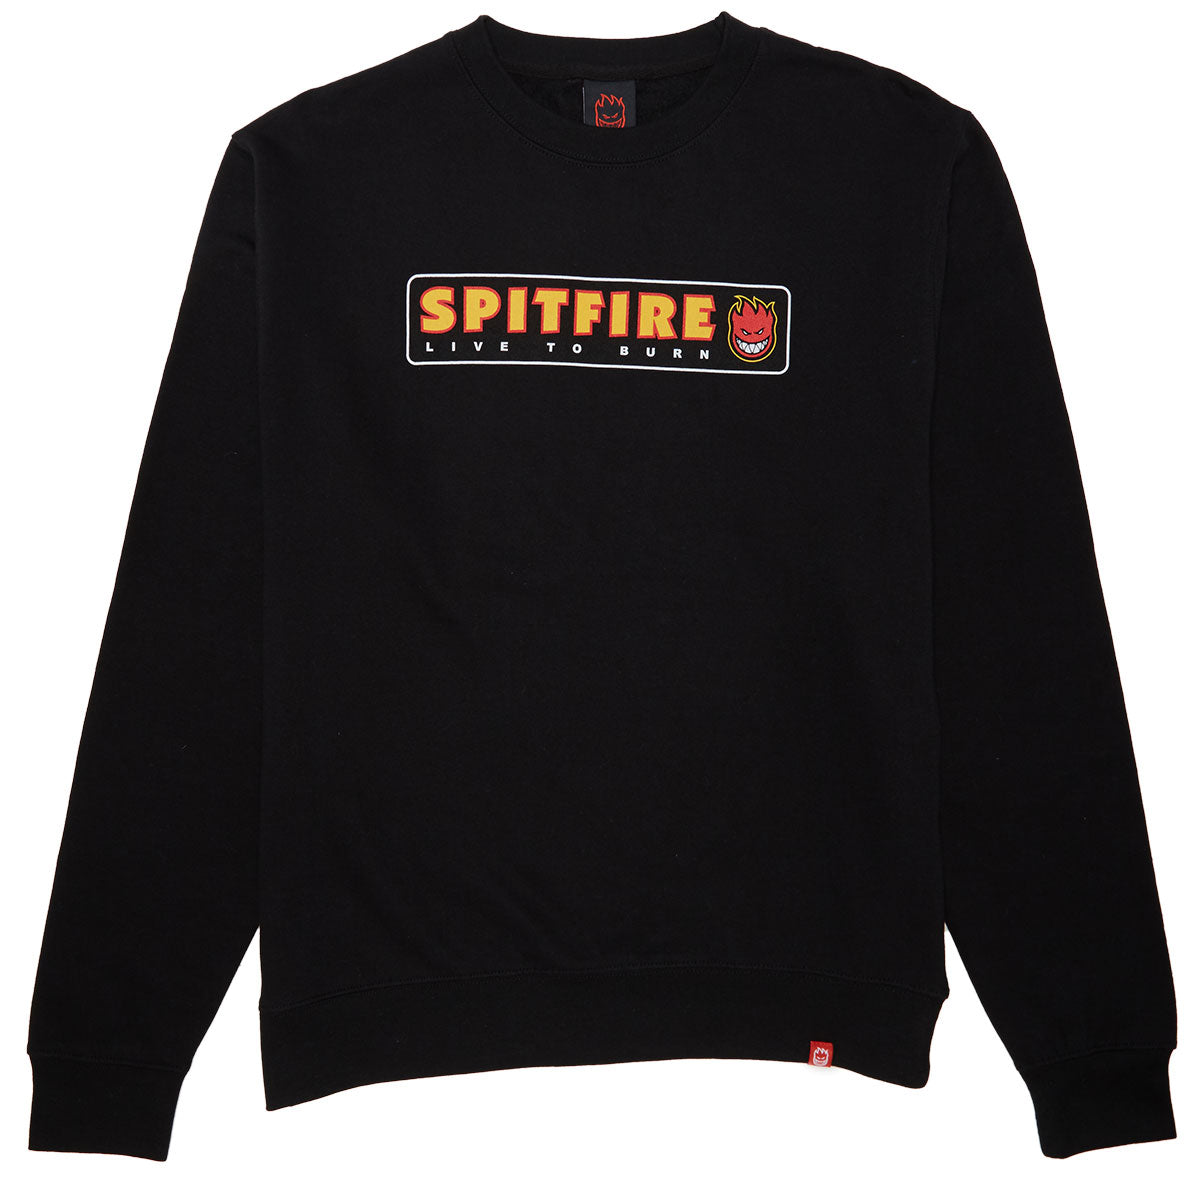 Spitfire Ltb Sweatshirt - Black/Multi Color image 1